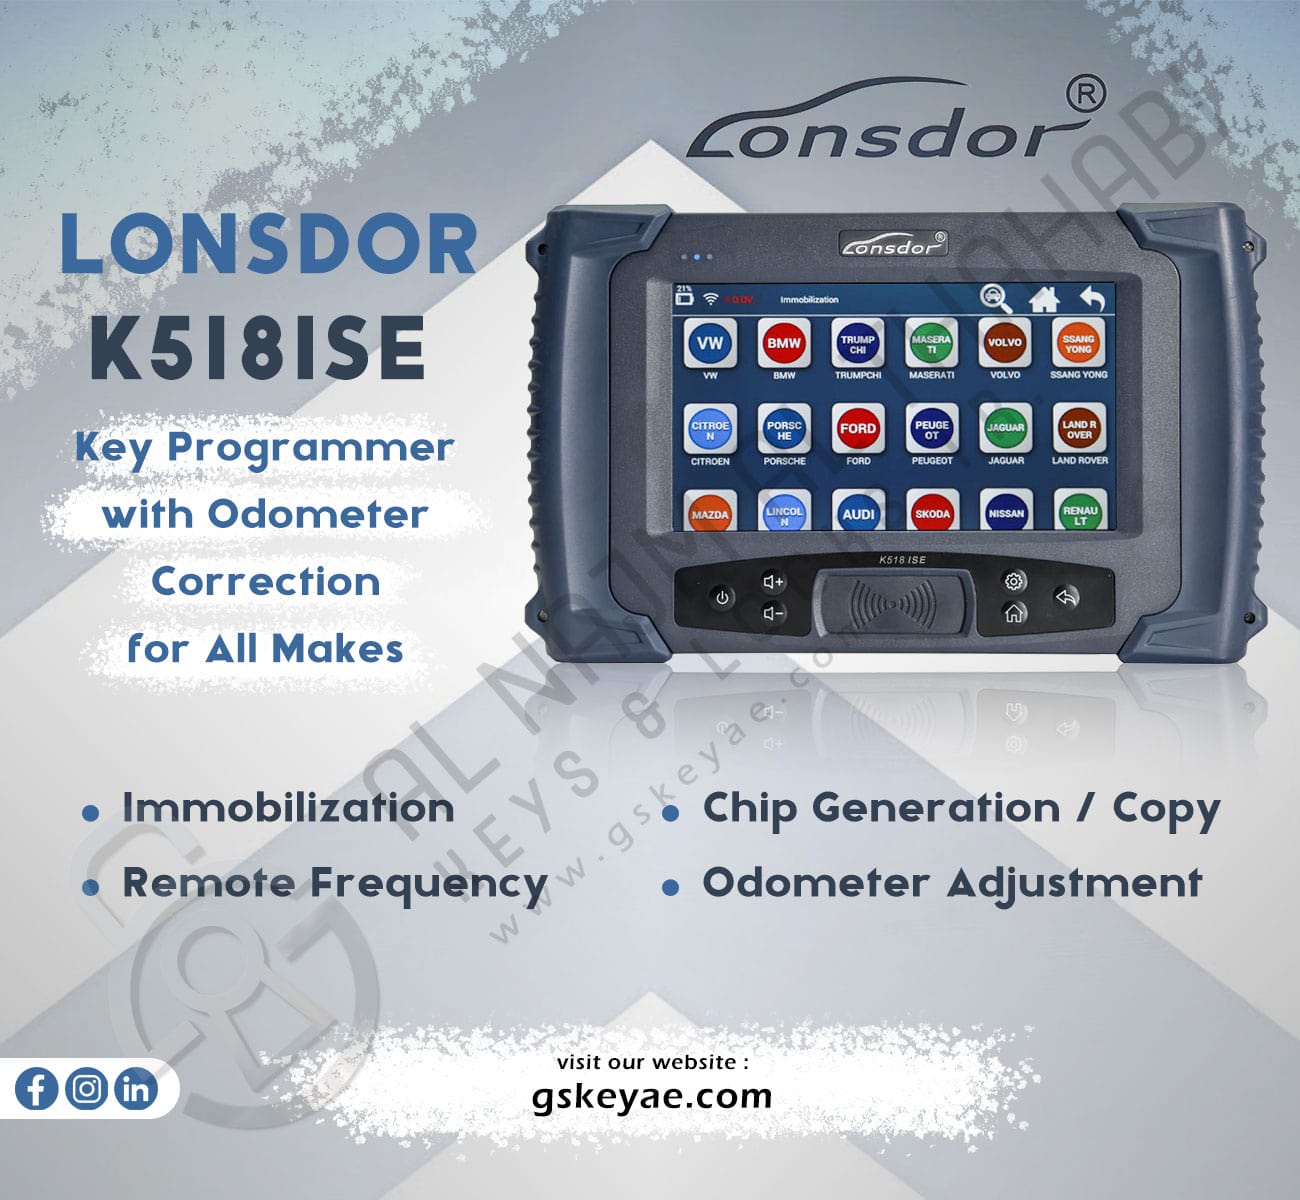 Lonsdor K518ISE Key Programmer Device